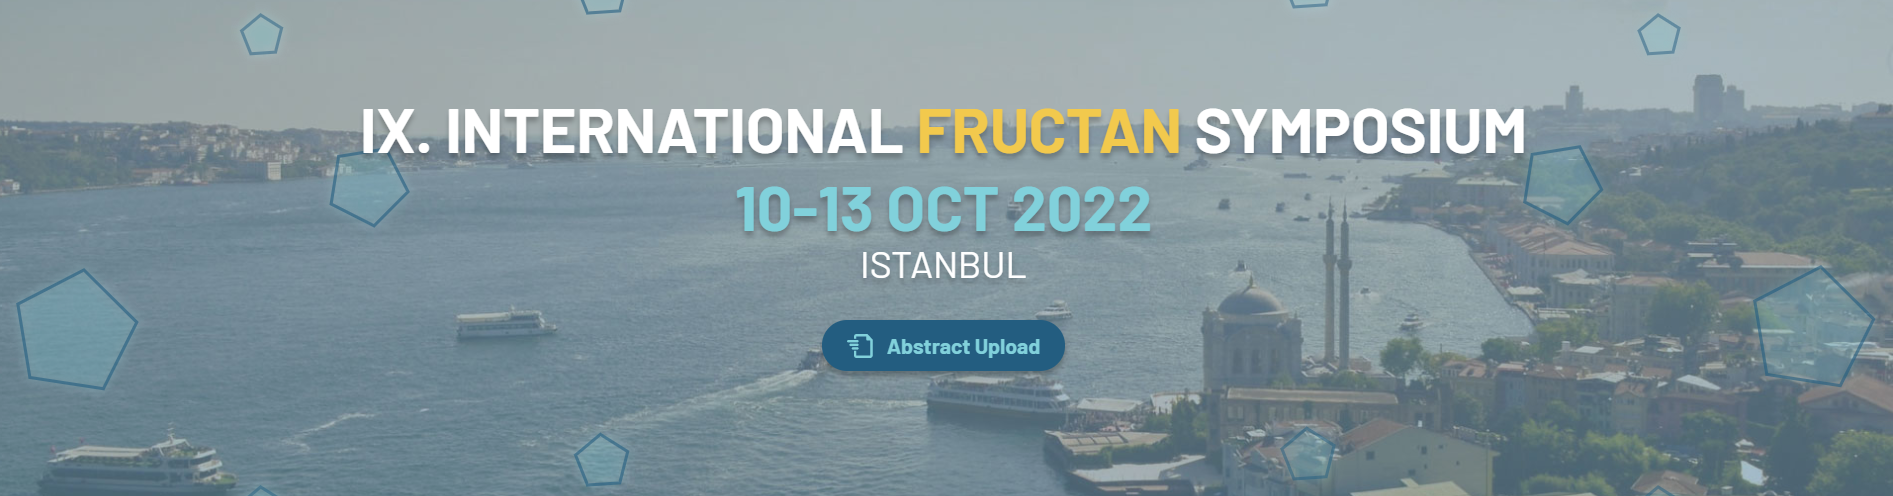 9. International Fructan Symposium – IFS 2022